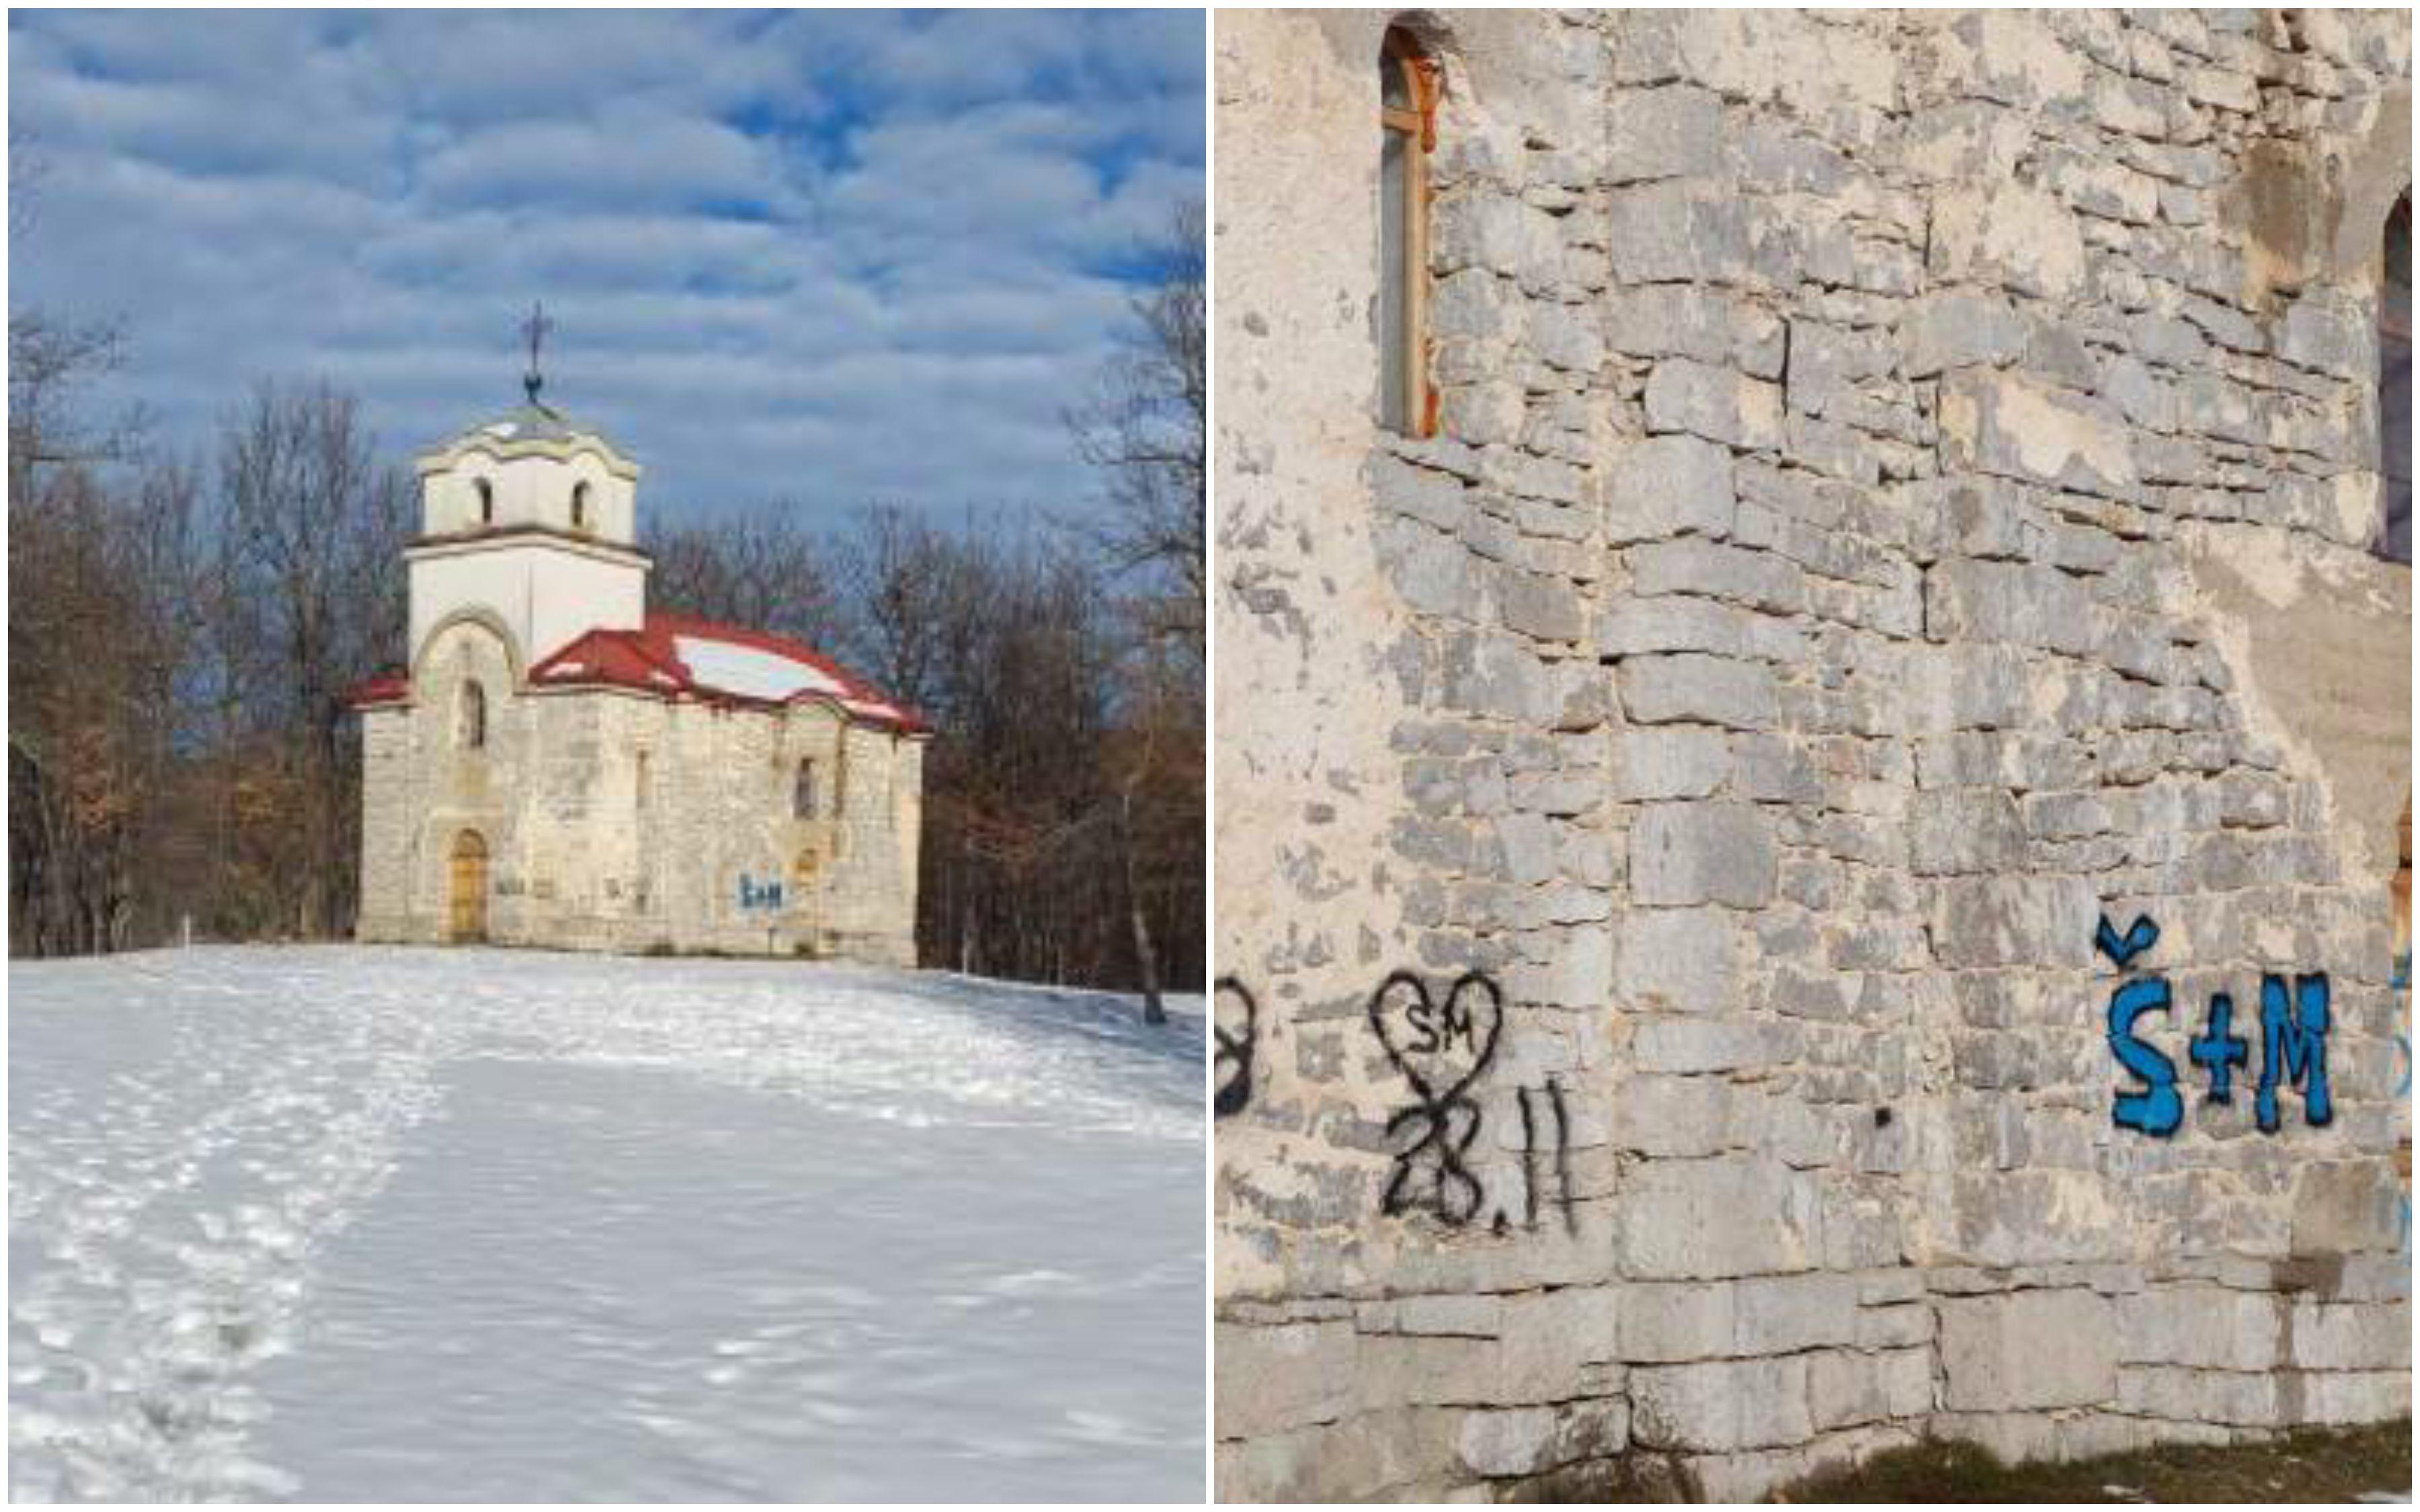 Oskrnavljena crkva Vaznesenja Gospodnjeg u blizini migrantskog kampa - Avaz